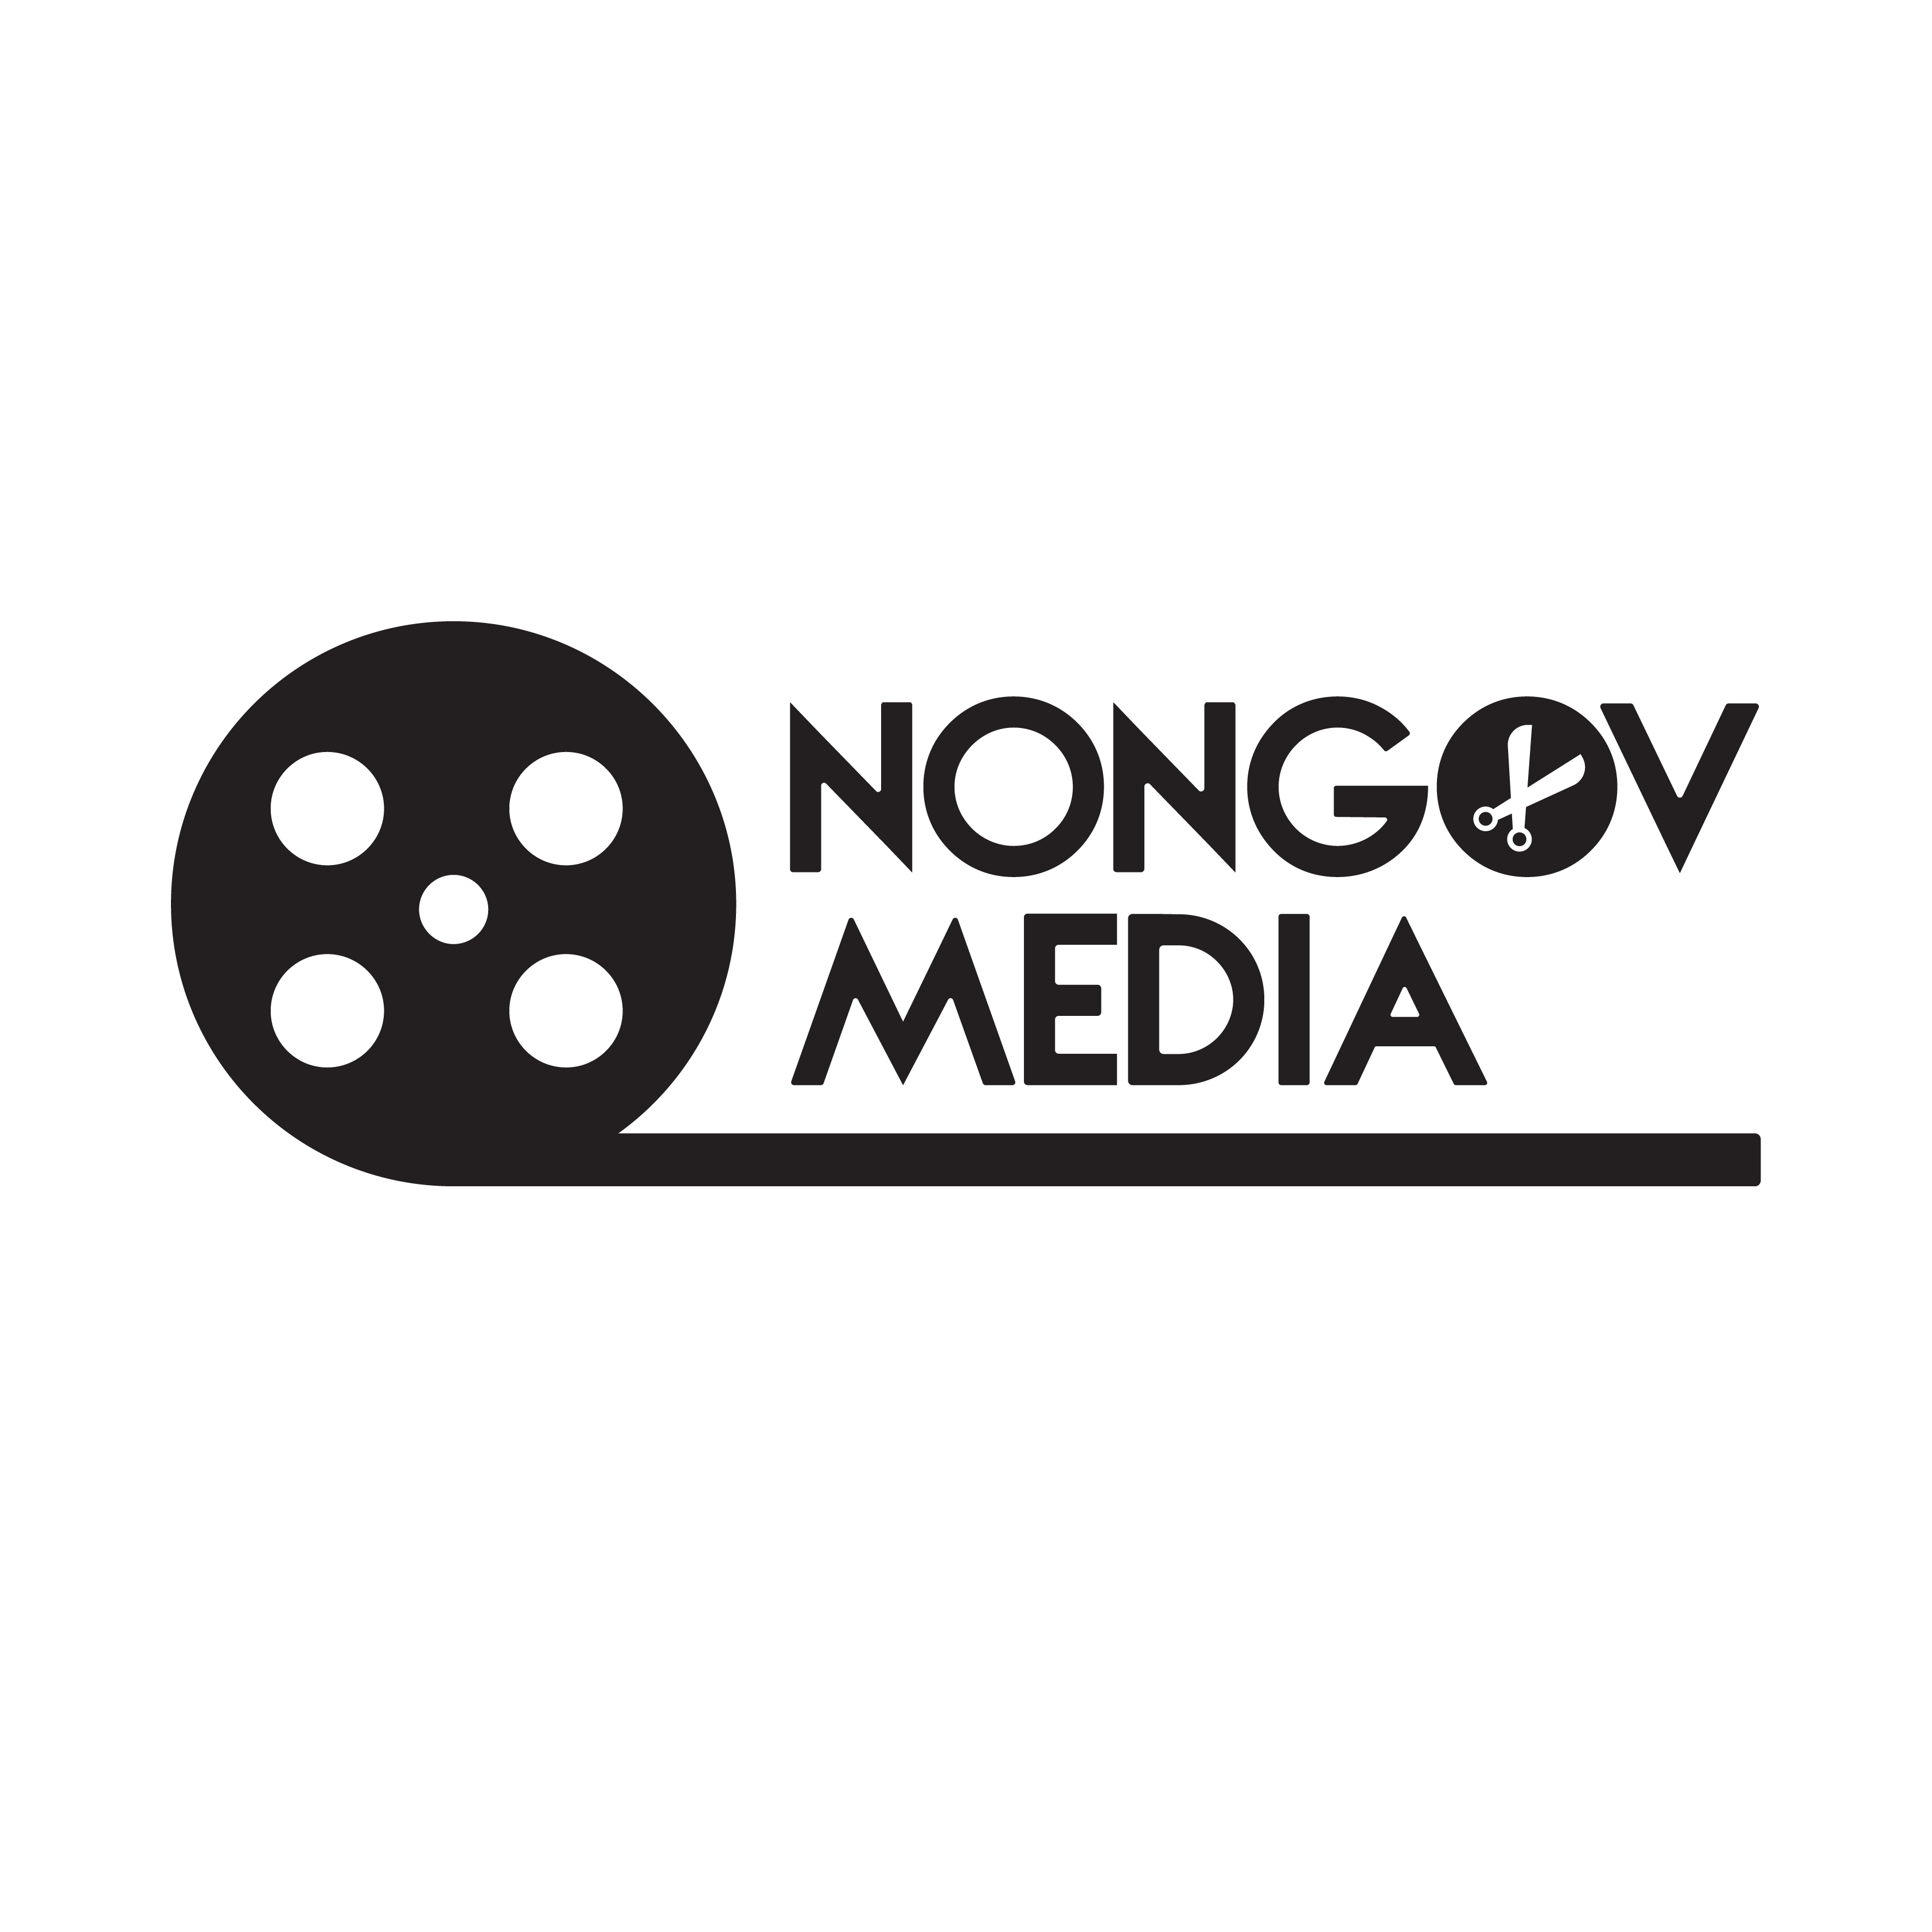 the logo mark for the explainer video production company Nongovmedia